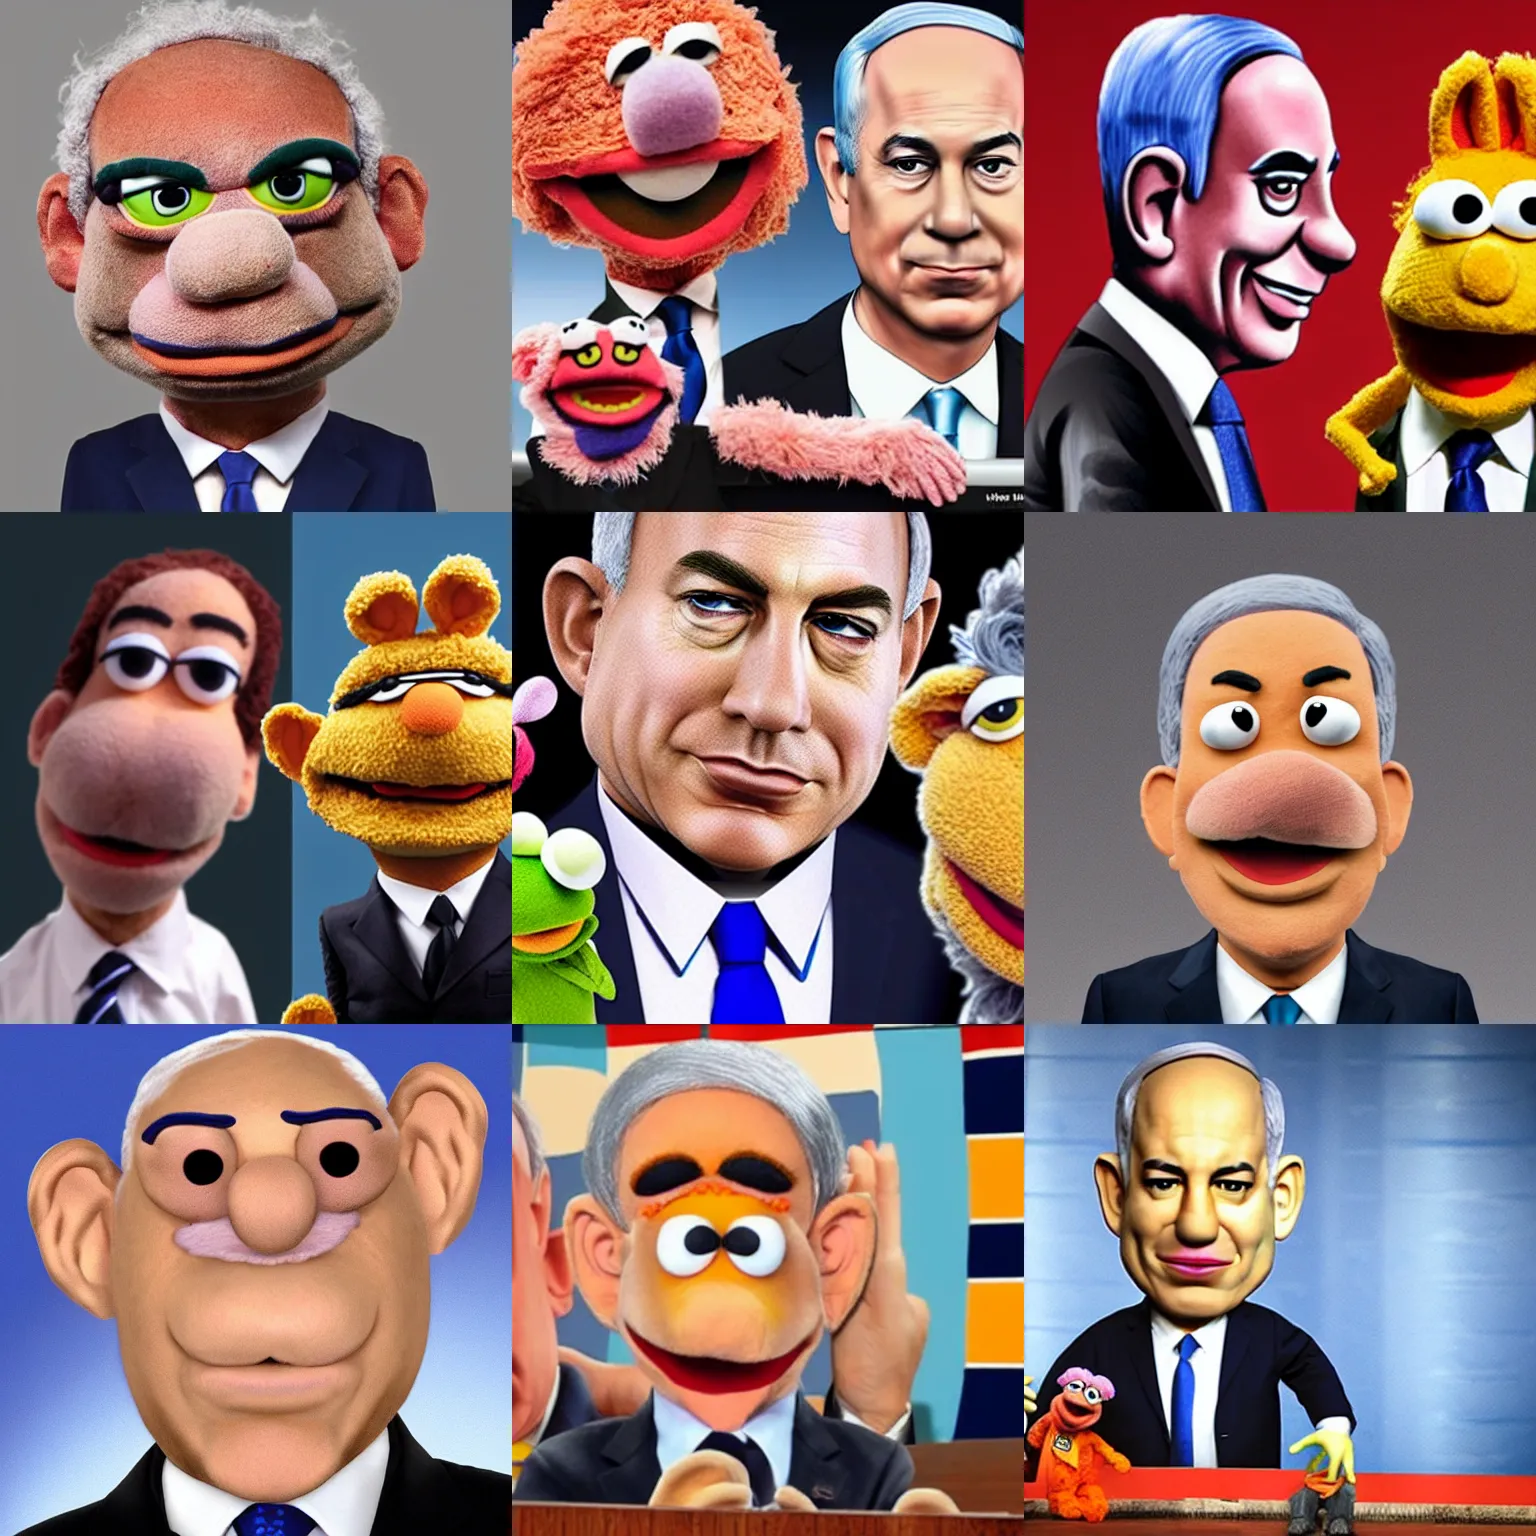 Prompt: hyper-realistic image of bibi Netanyahu as a muppet